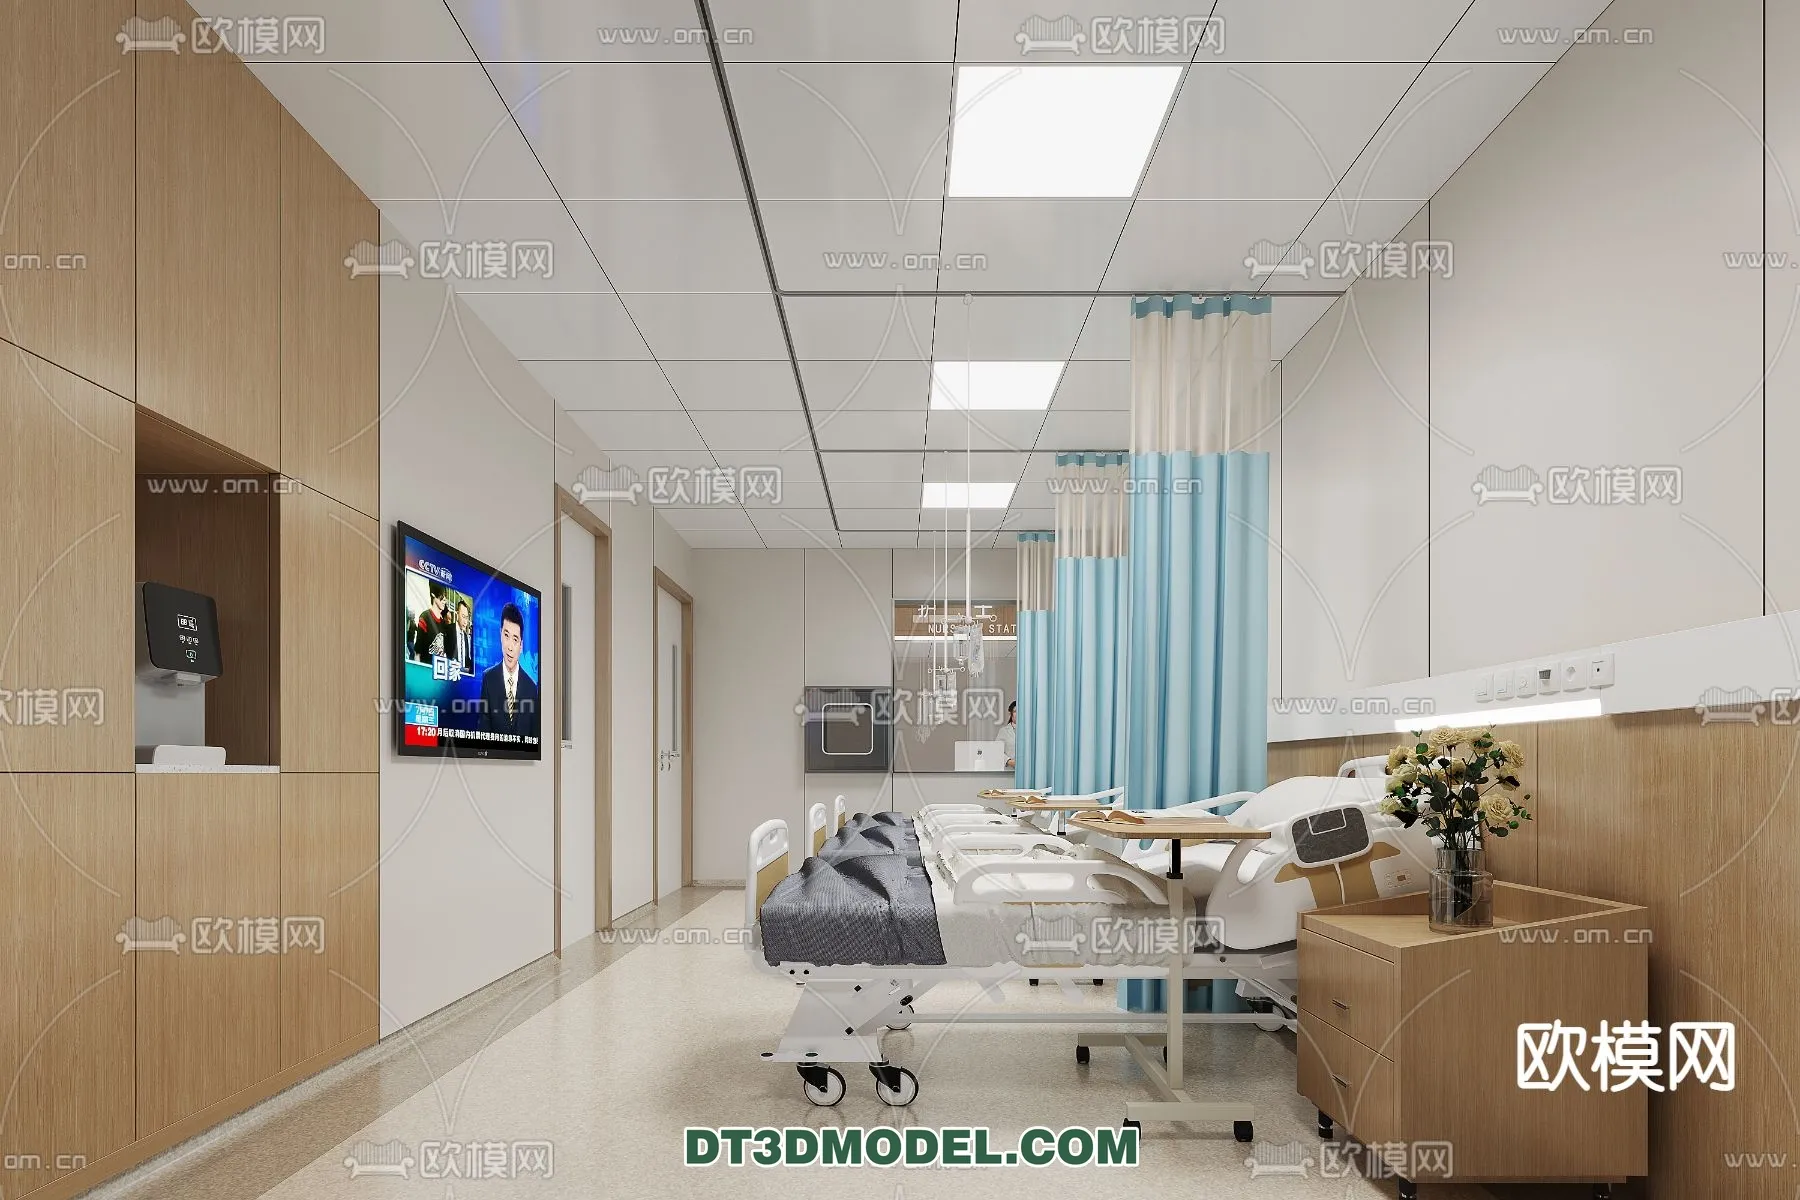 HOSPITAL 3D SCENES – MODERN – 0030